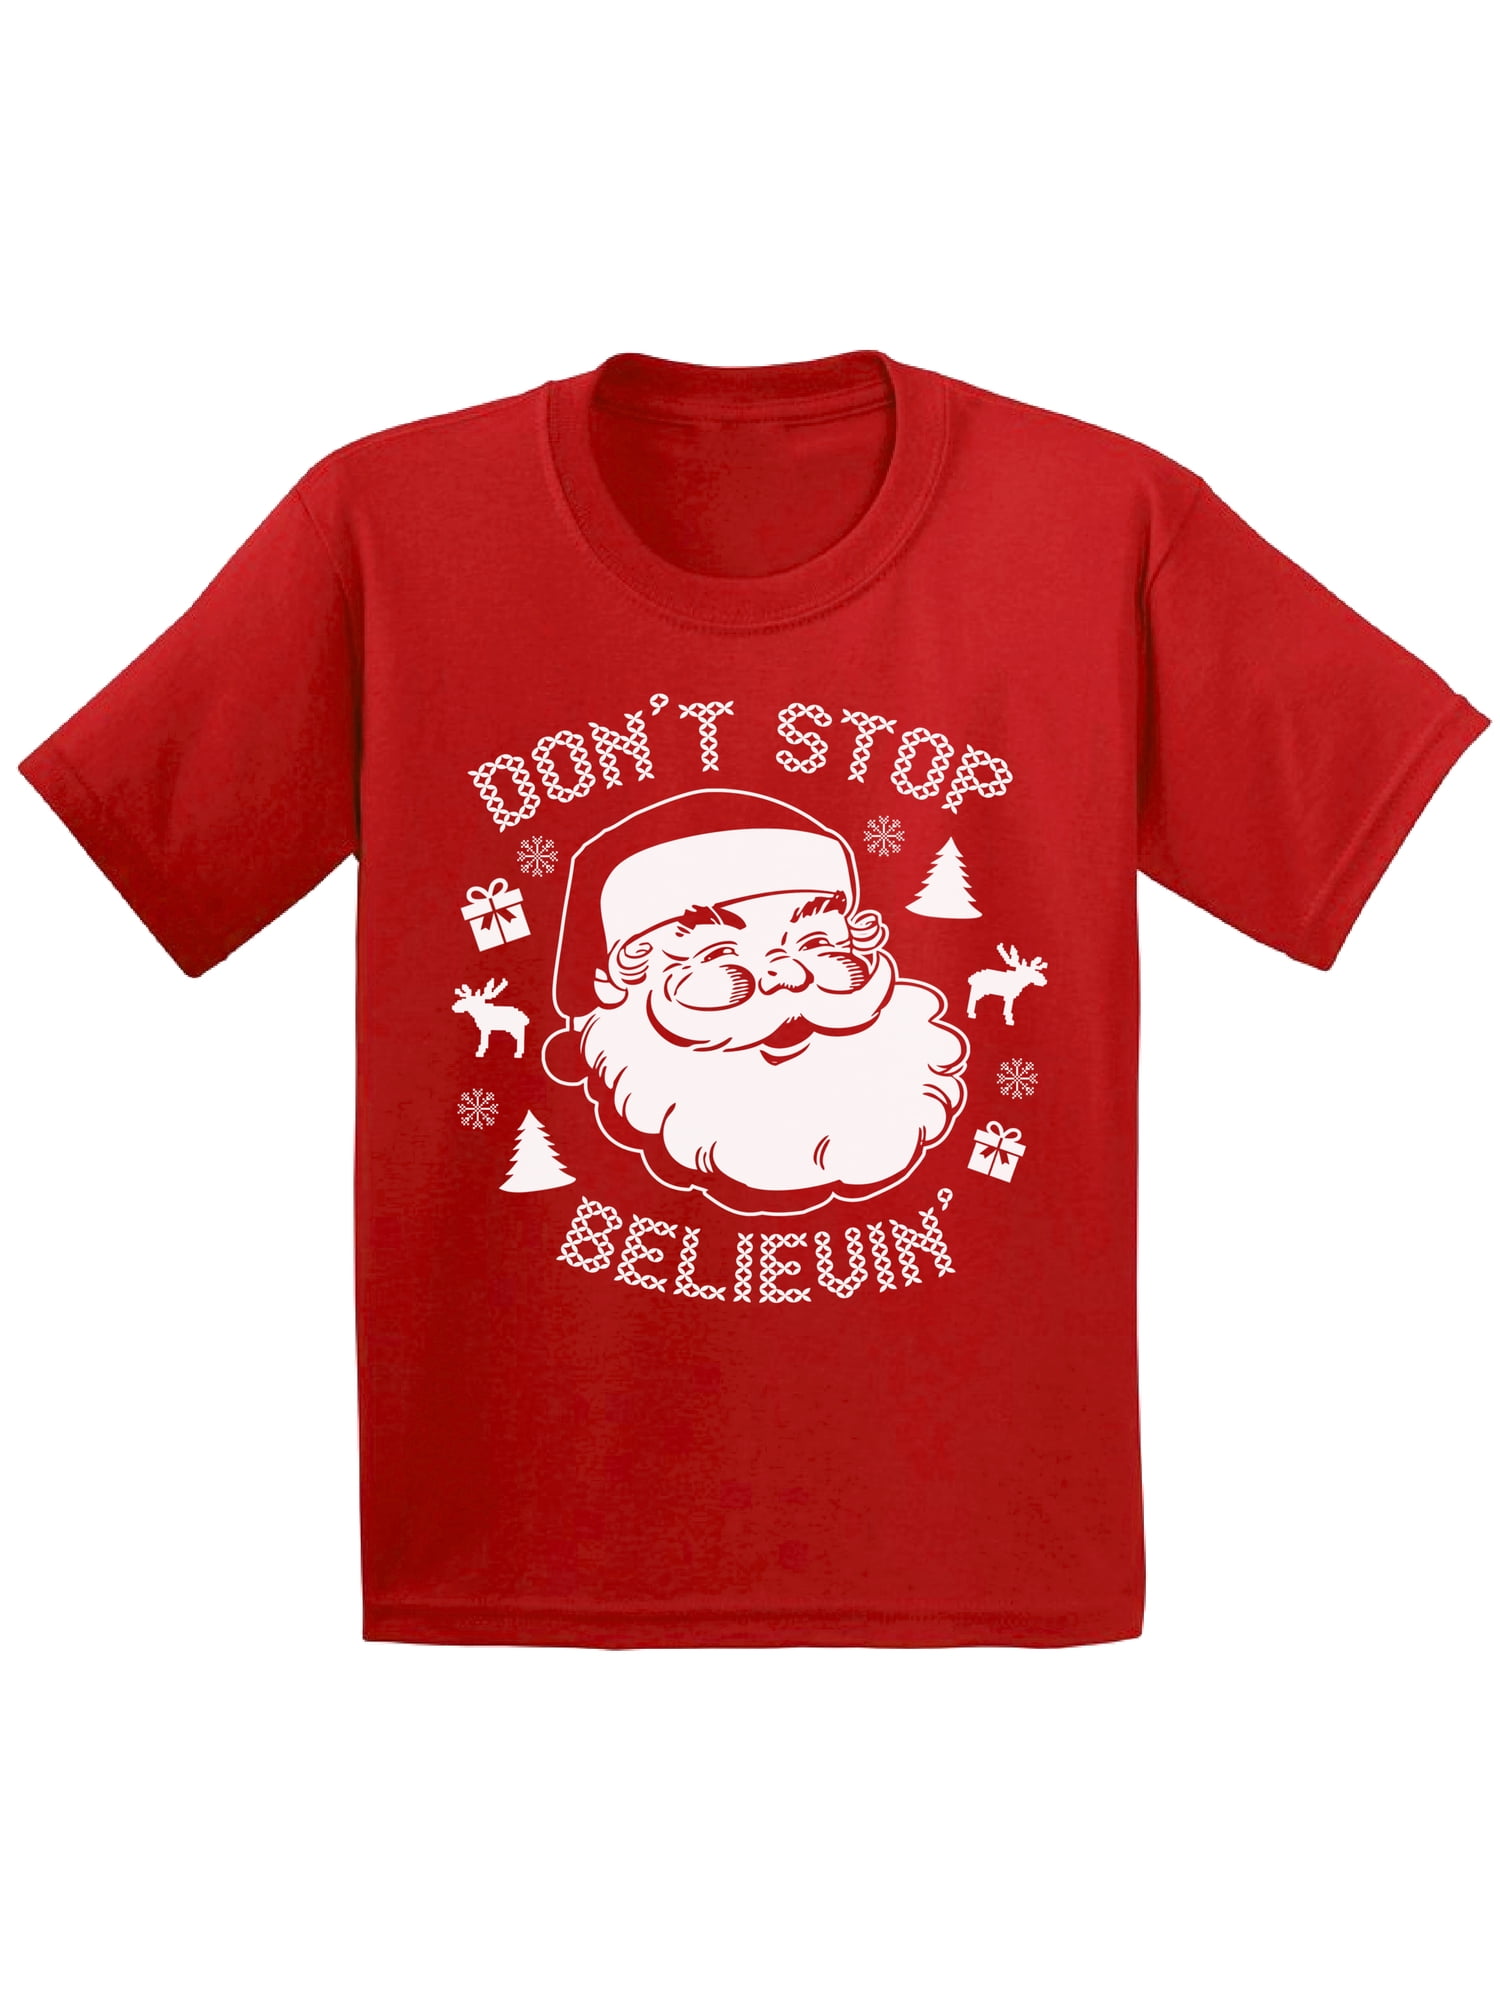 Santa Claus Suit Funny Novelty Christmas Gift Youth Kids T-Shirt Xmas 